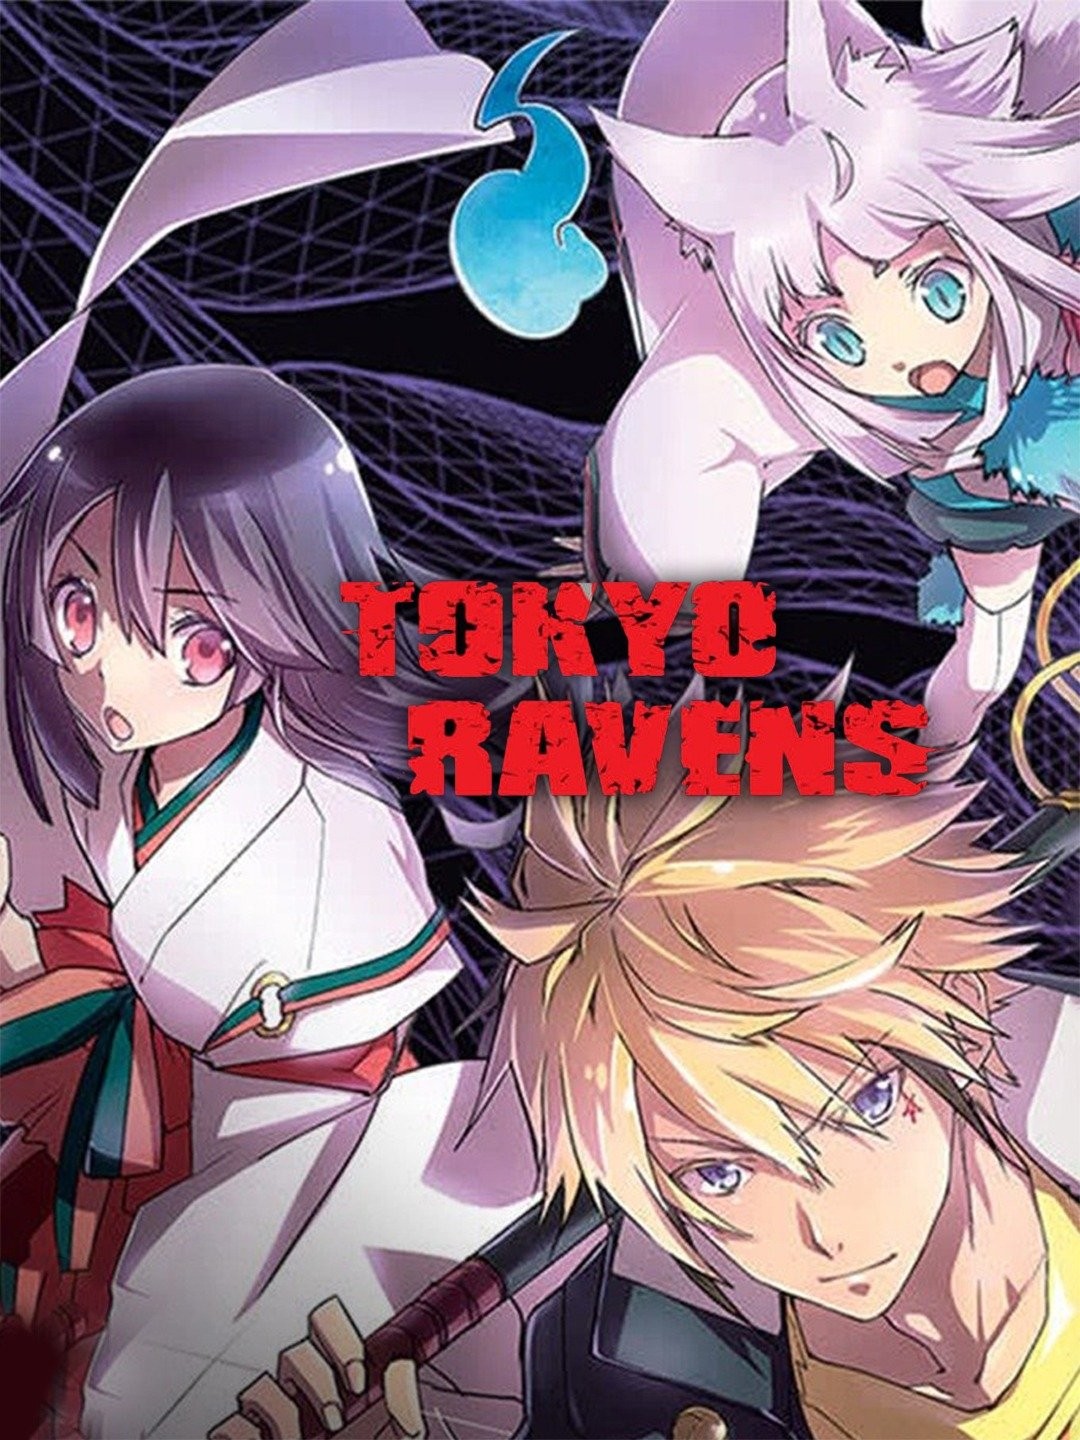 TV Time - Tokyo Ravens (TVShow Time)